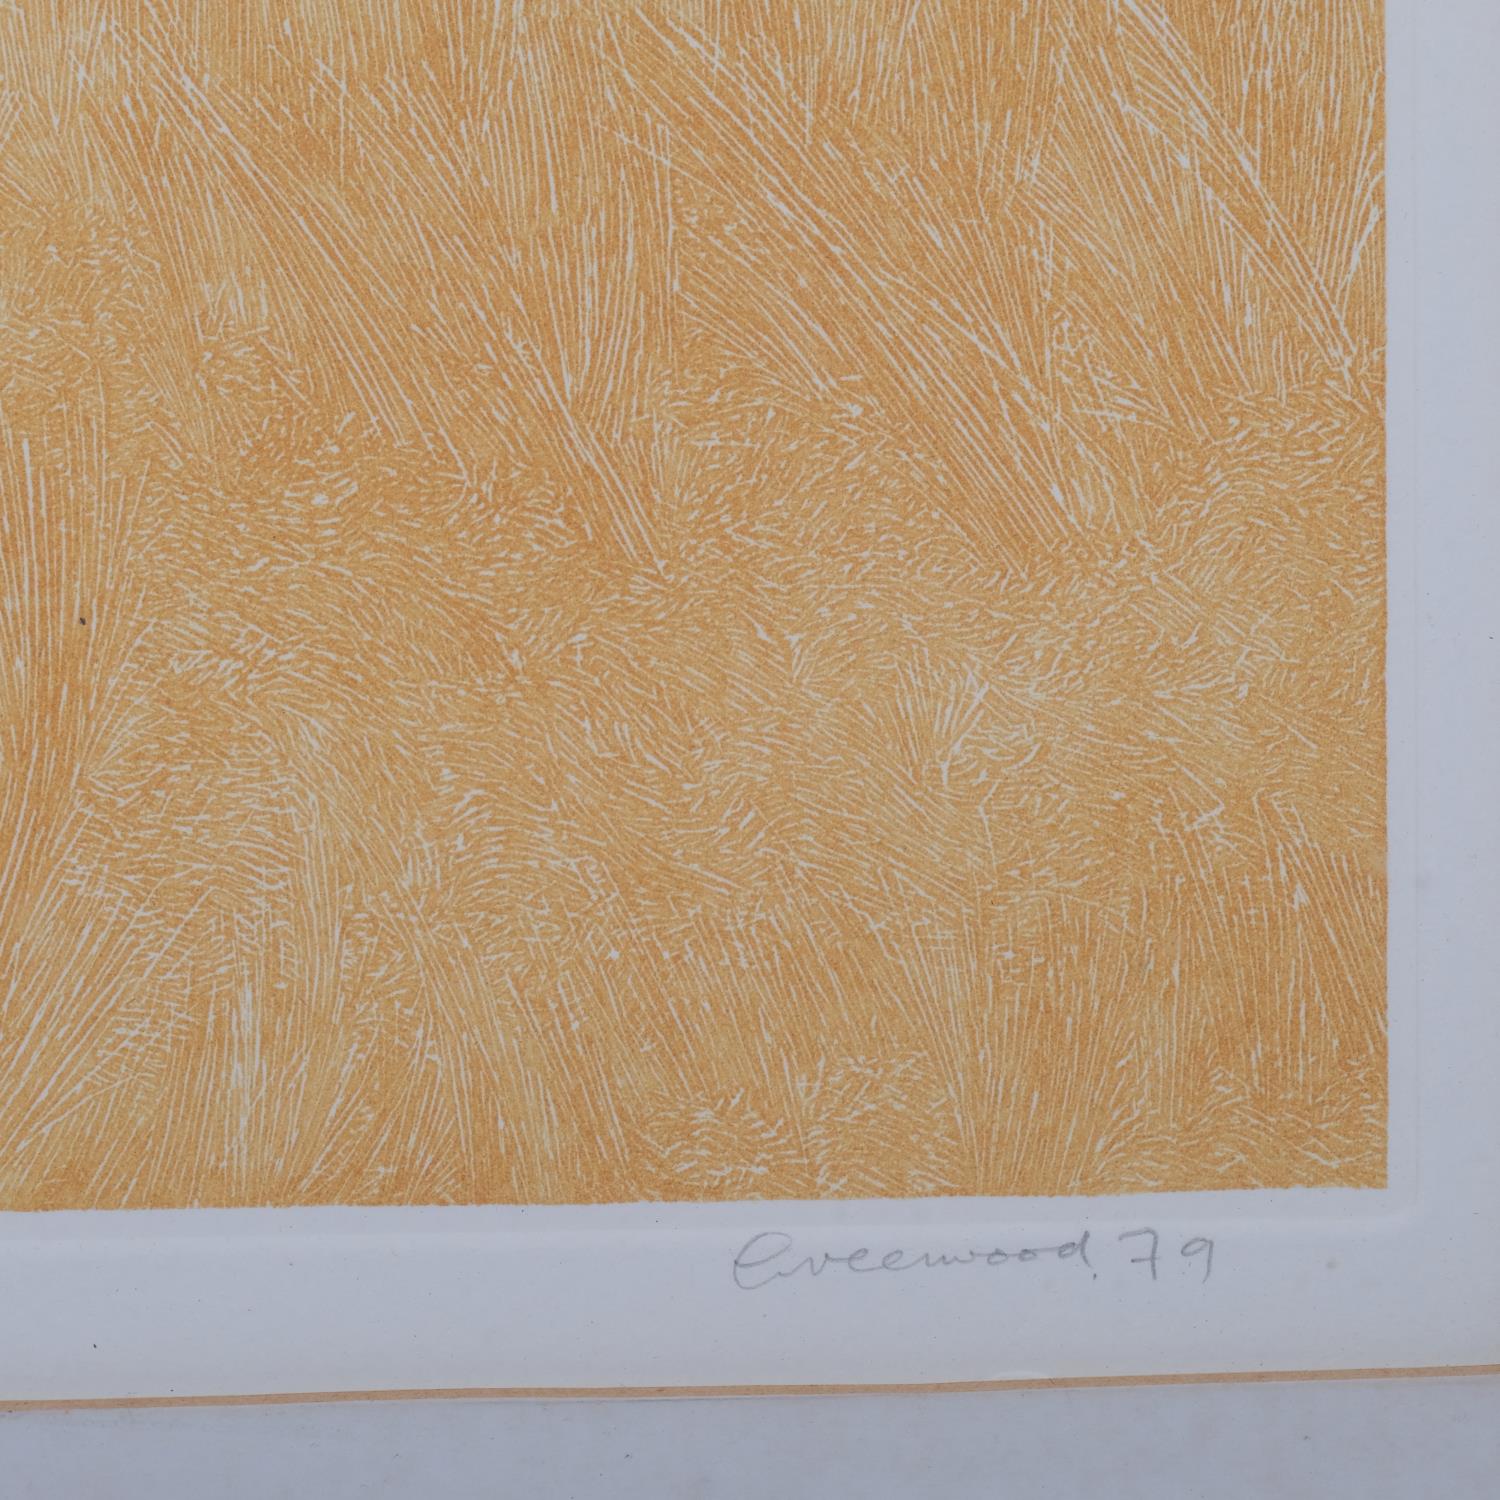 Phil Greenwood (born 1943), treeline, etching/aquatint, signed in pencil, plate 51cm x 42cm, - Image 3 of 4